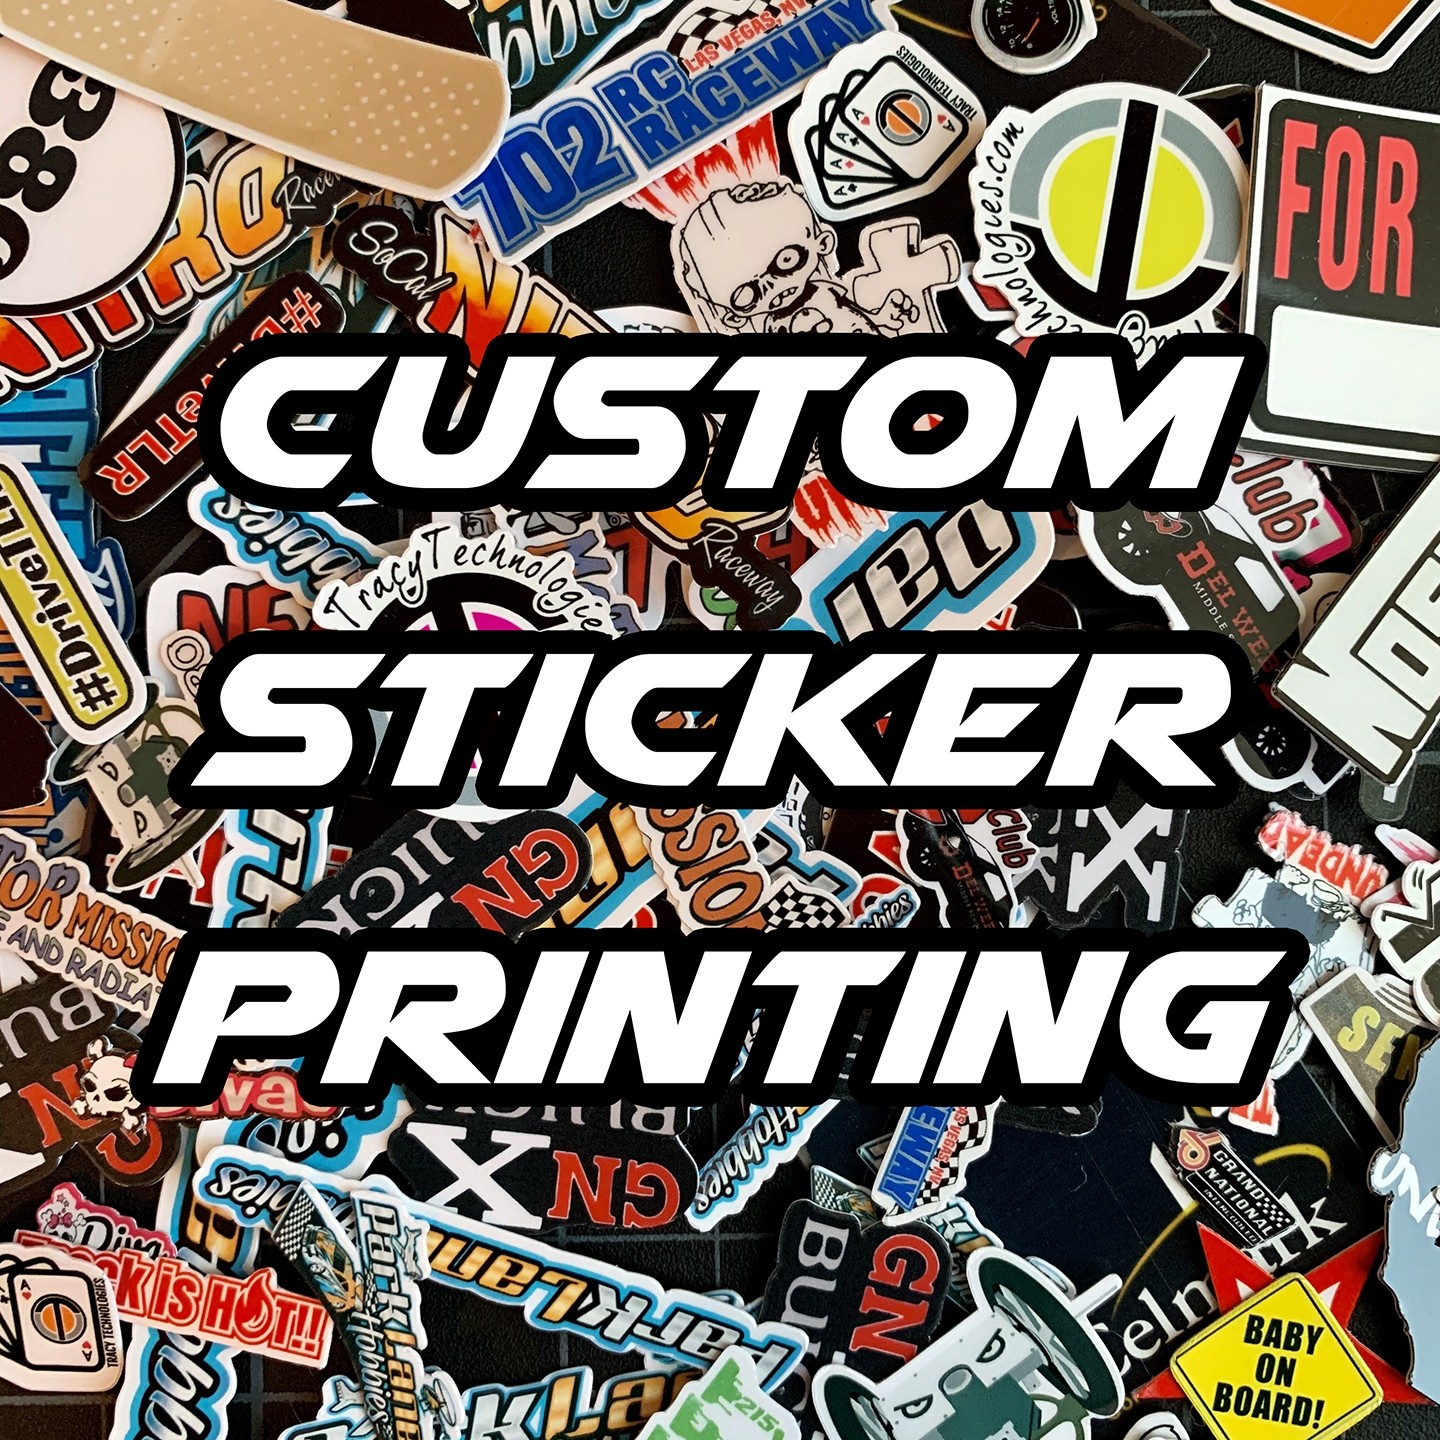 Sundance Print Centers: 3in Custom Die Cut Stickers